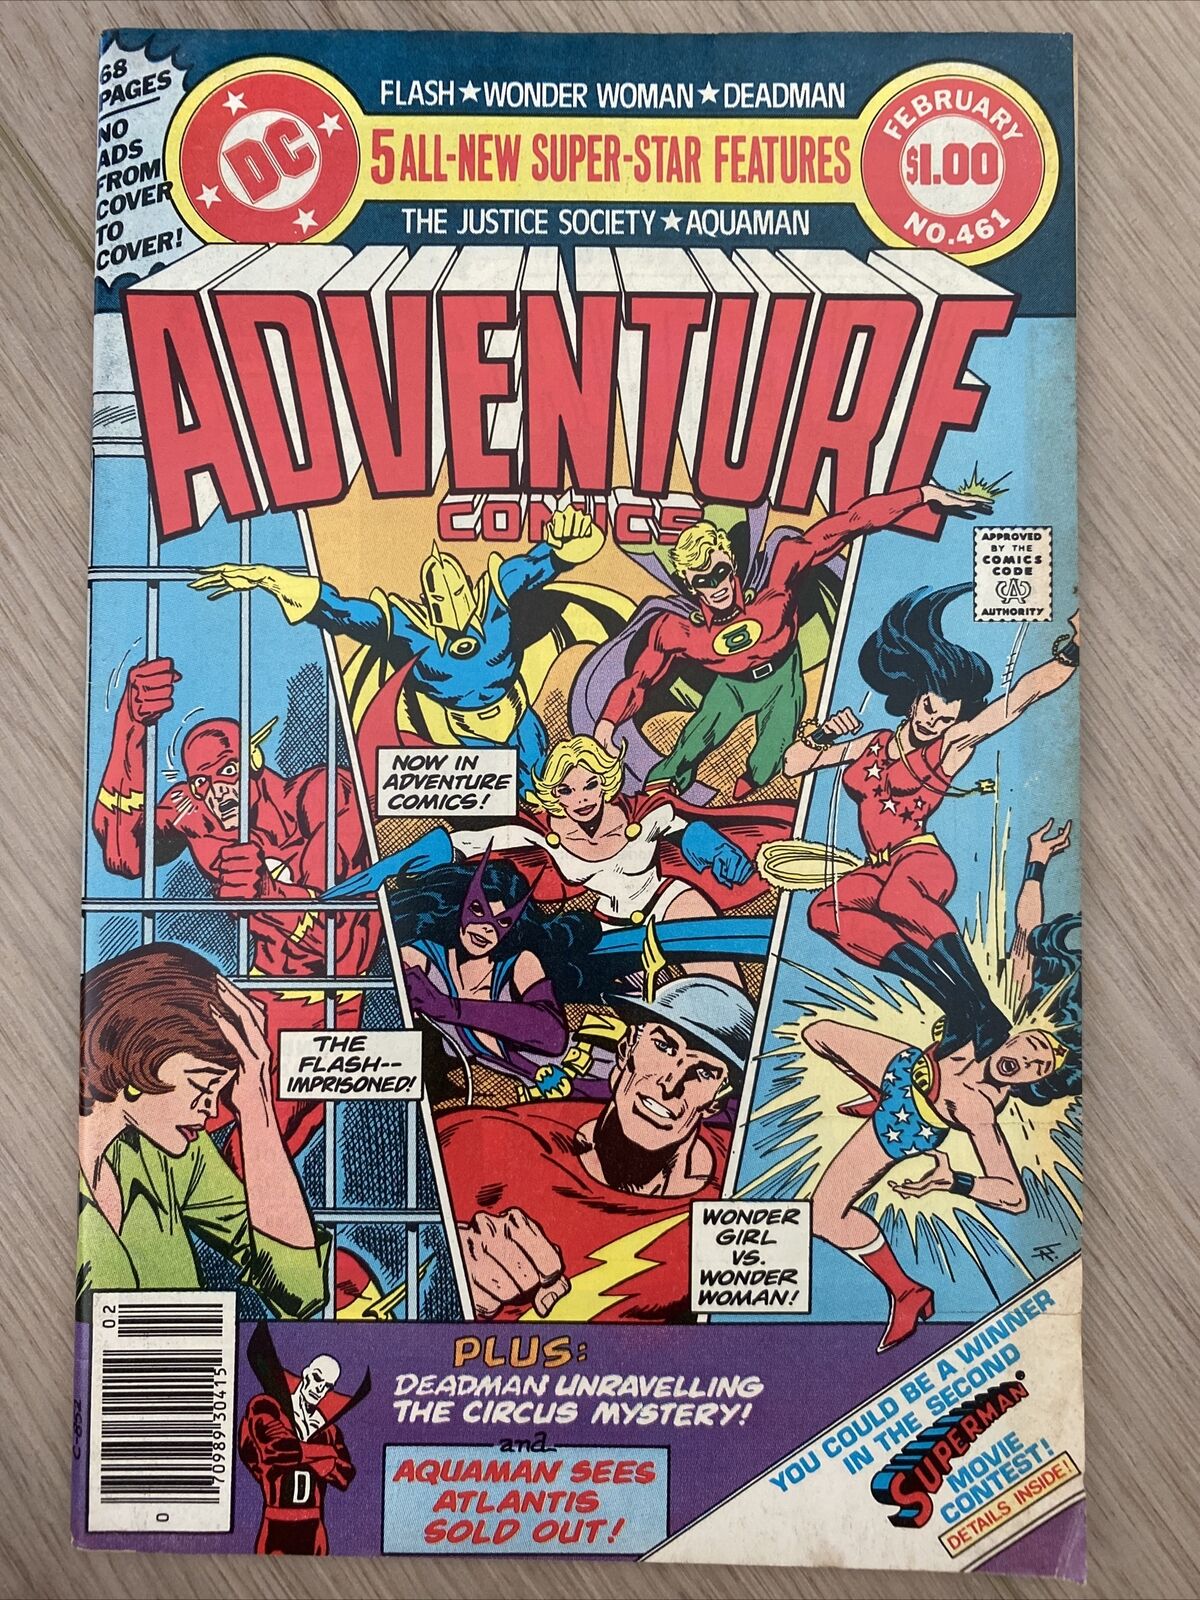 DC Adventure Comics #461 Feb ‘79, ￼Flash, WW, Deadman, ￼the Justice Society